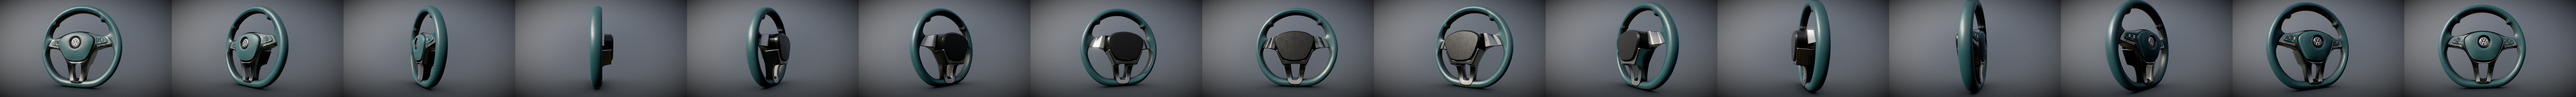 Volkswagen steering wheel - Download Free 3D model by DailyArt (@D.art)  [dc70d68]